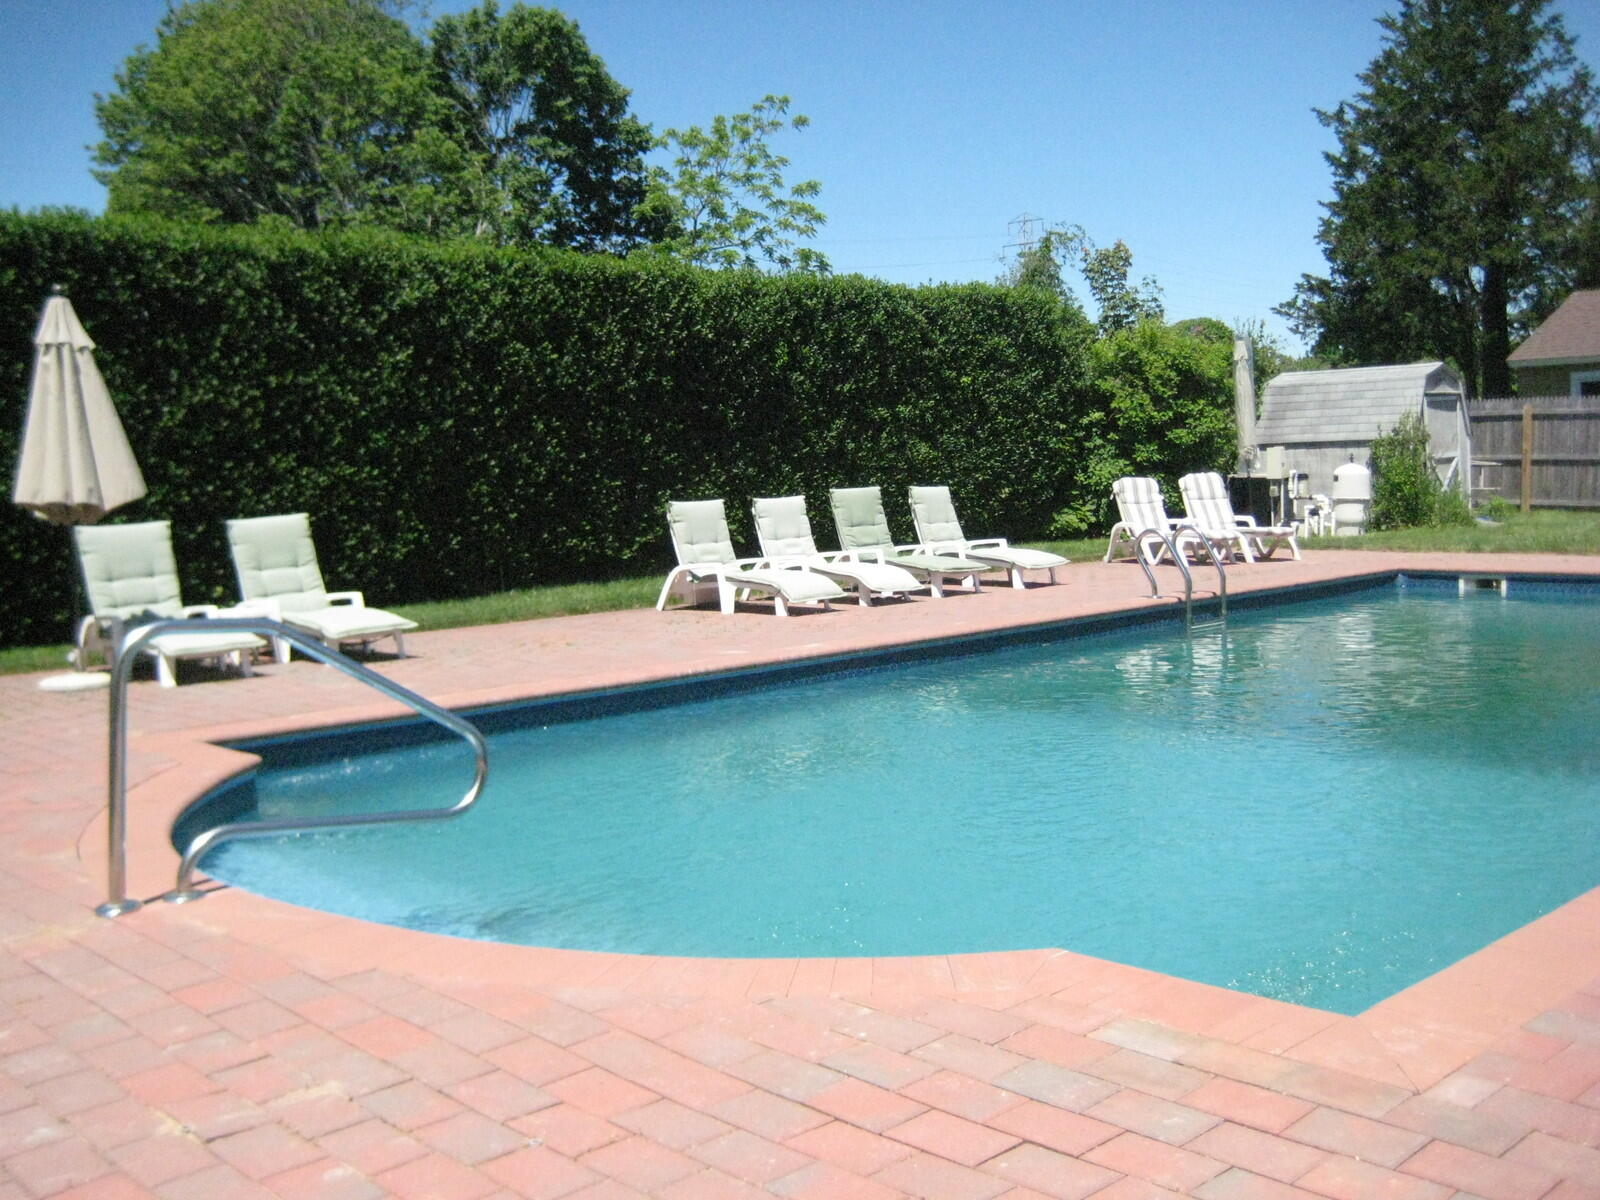 Rental Property at Village Of Southampton, Village Of Southampton, Hamptons, NY - Bedrooms: 3 
Bathrooms: 2  - $25,000 MO.